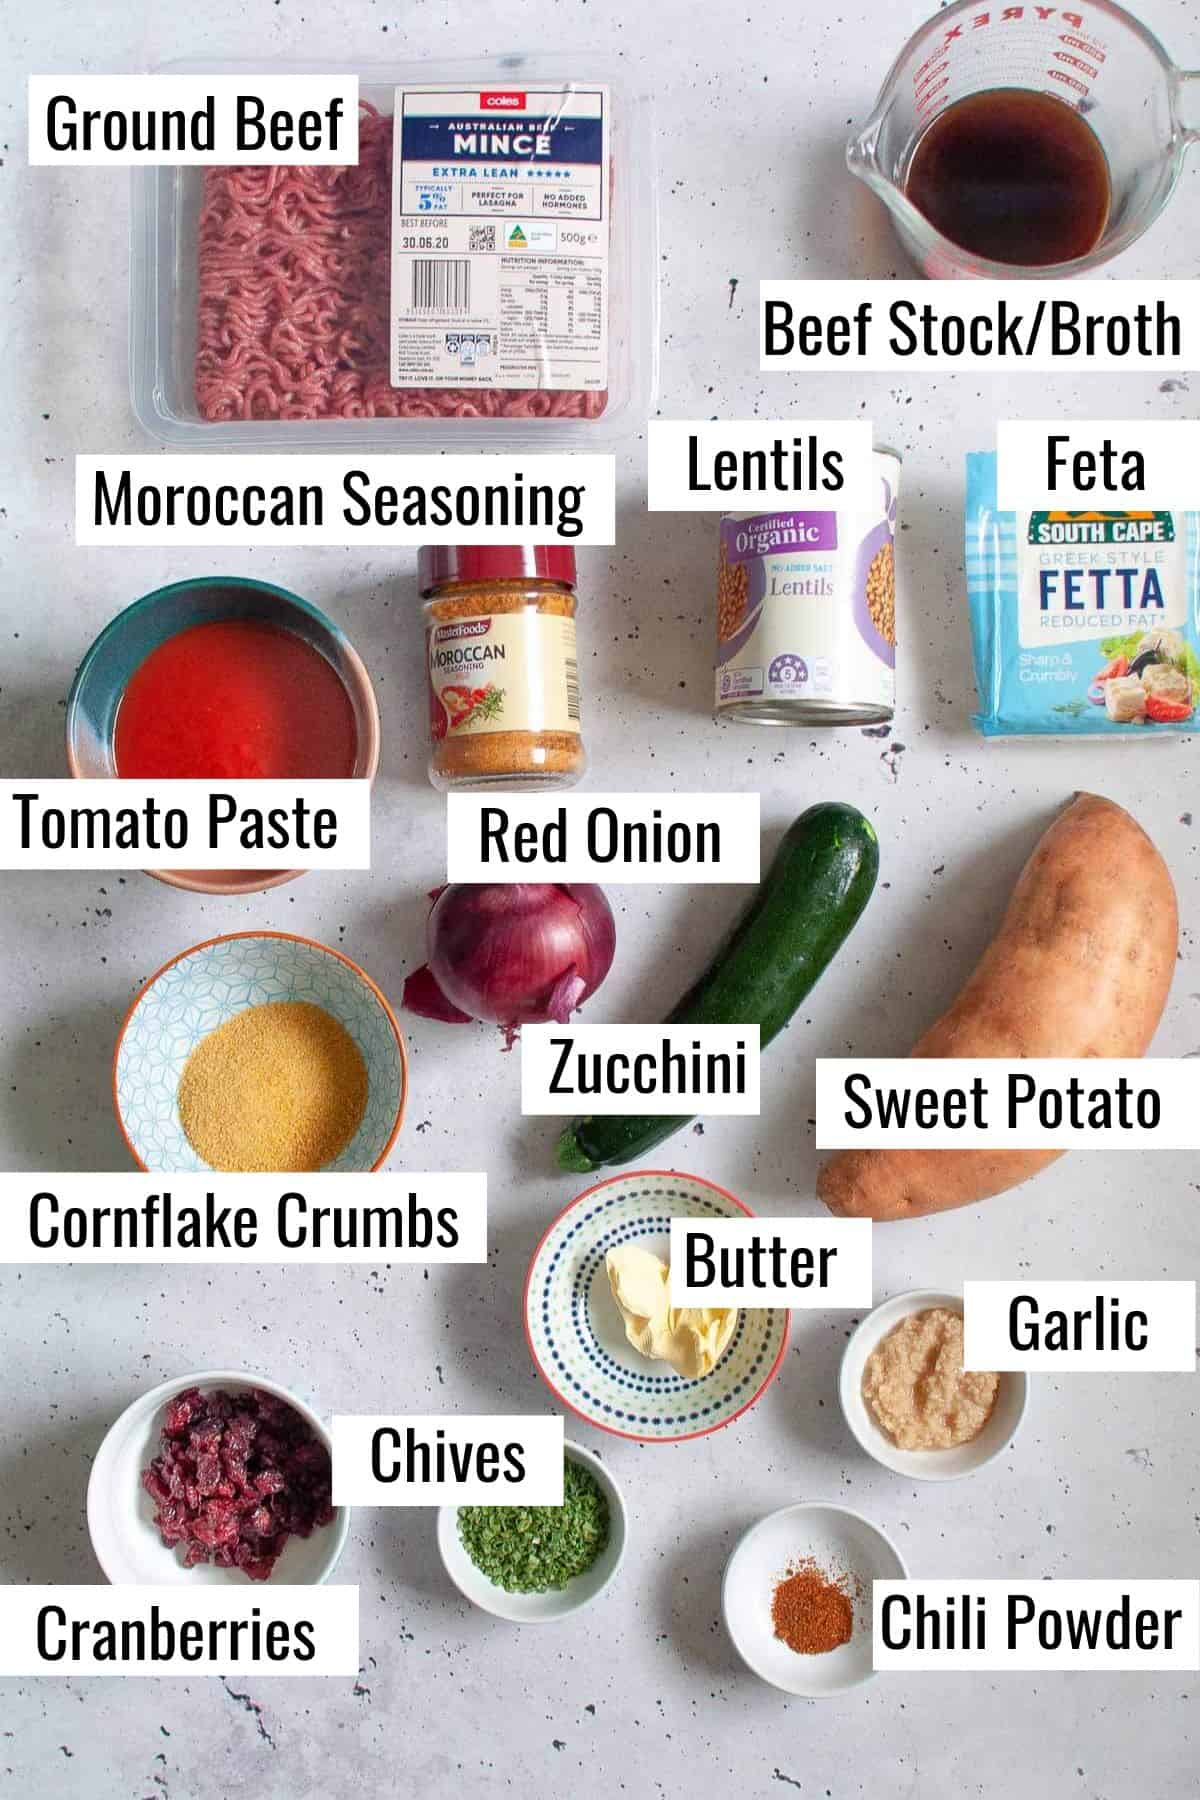 Ingredients needed to make beef shepherds pie with sweet potato